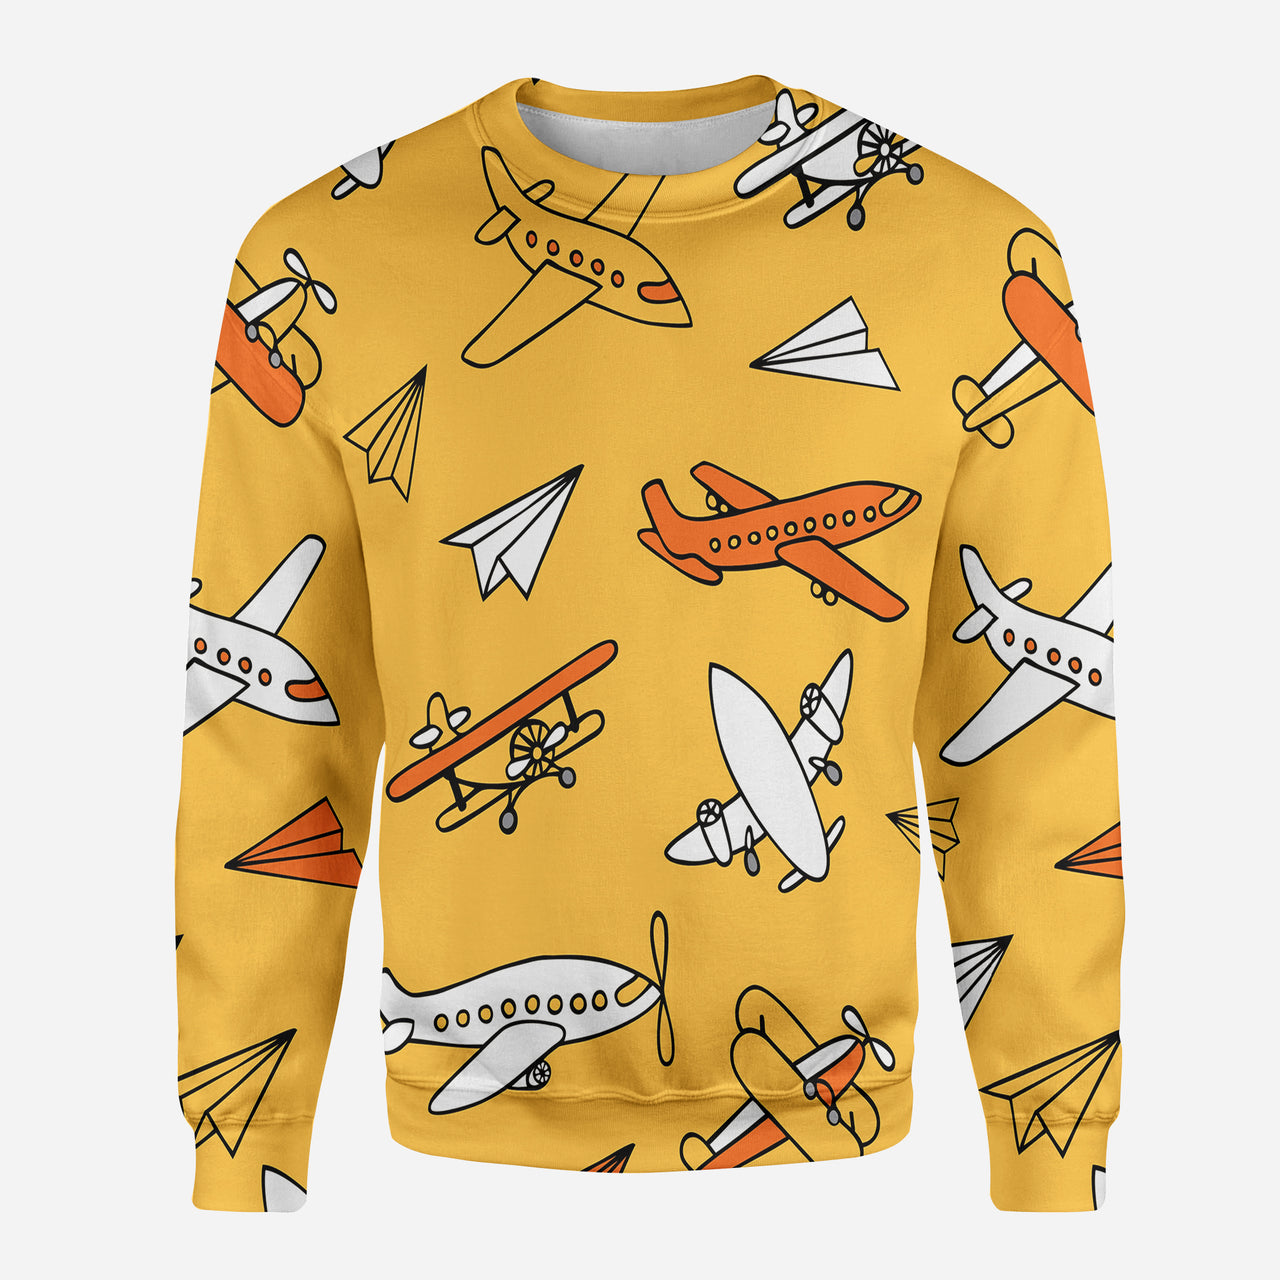 Super Drawings of Airplanes Designed 3D Sweatshirts